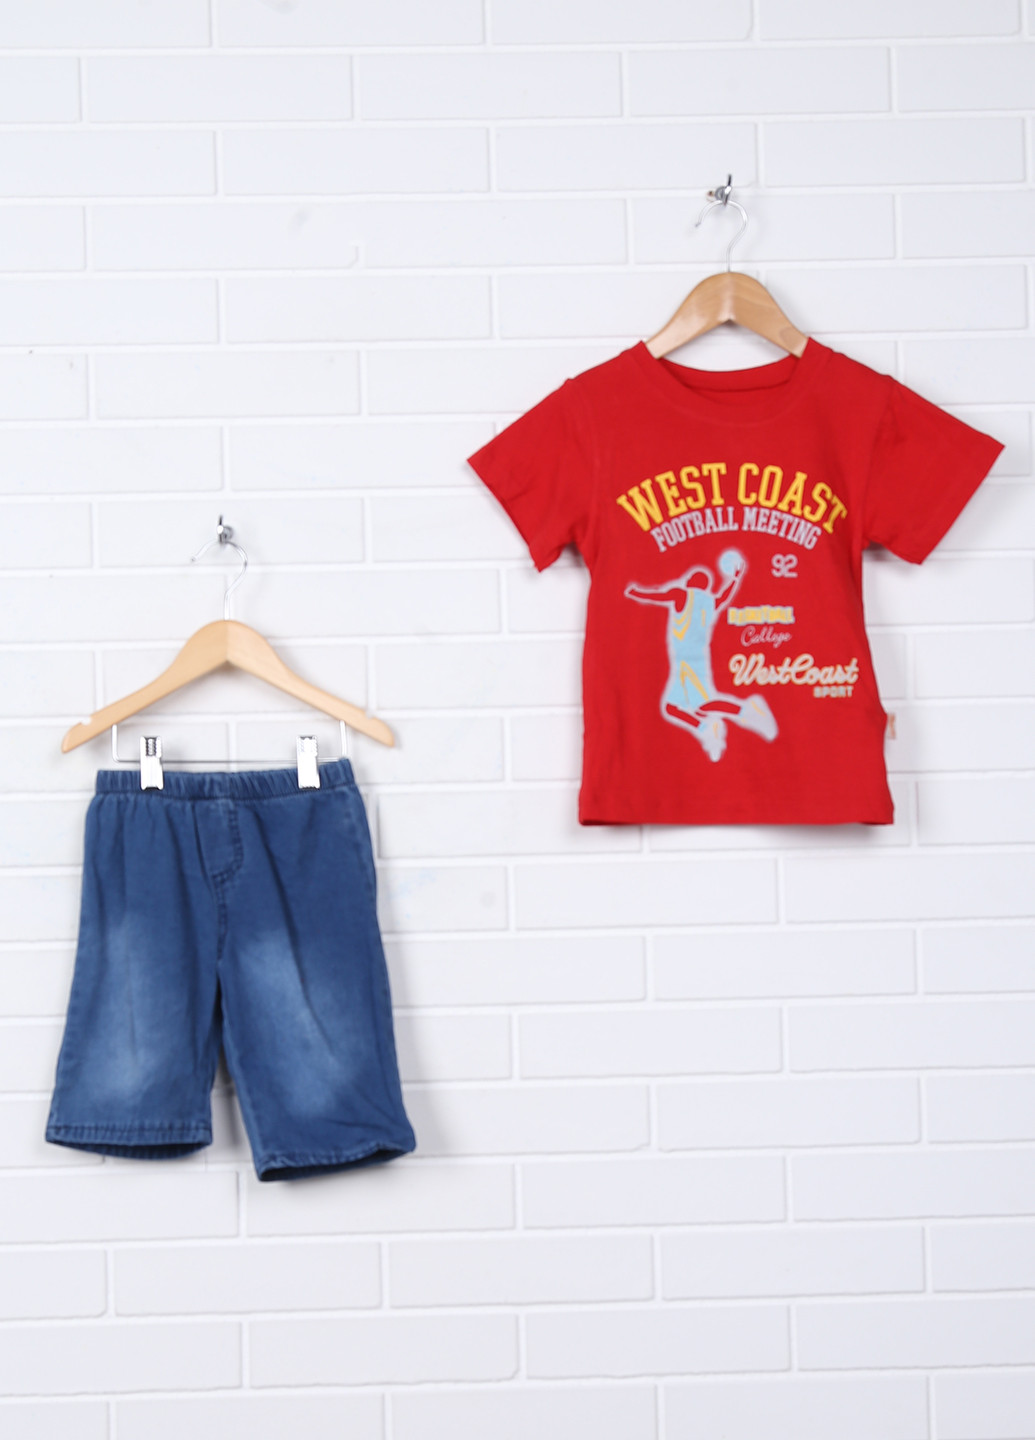 Красный летний комплект (футболка, шорты) Poyef